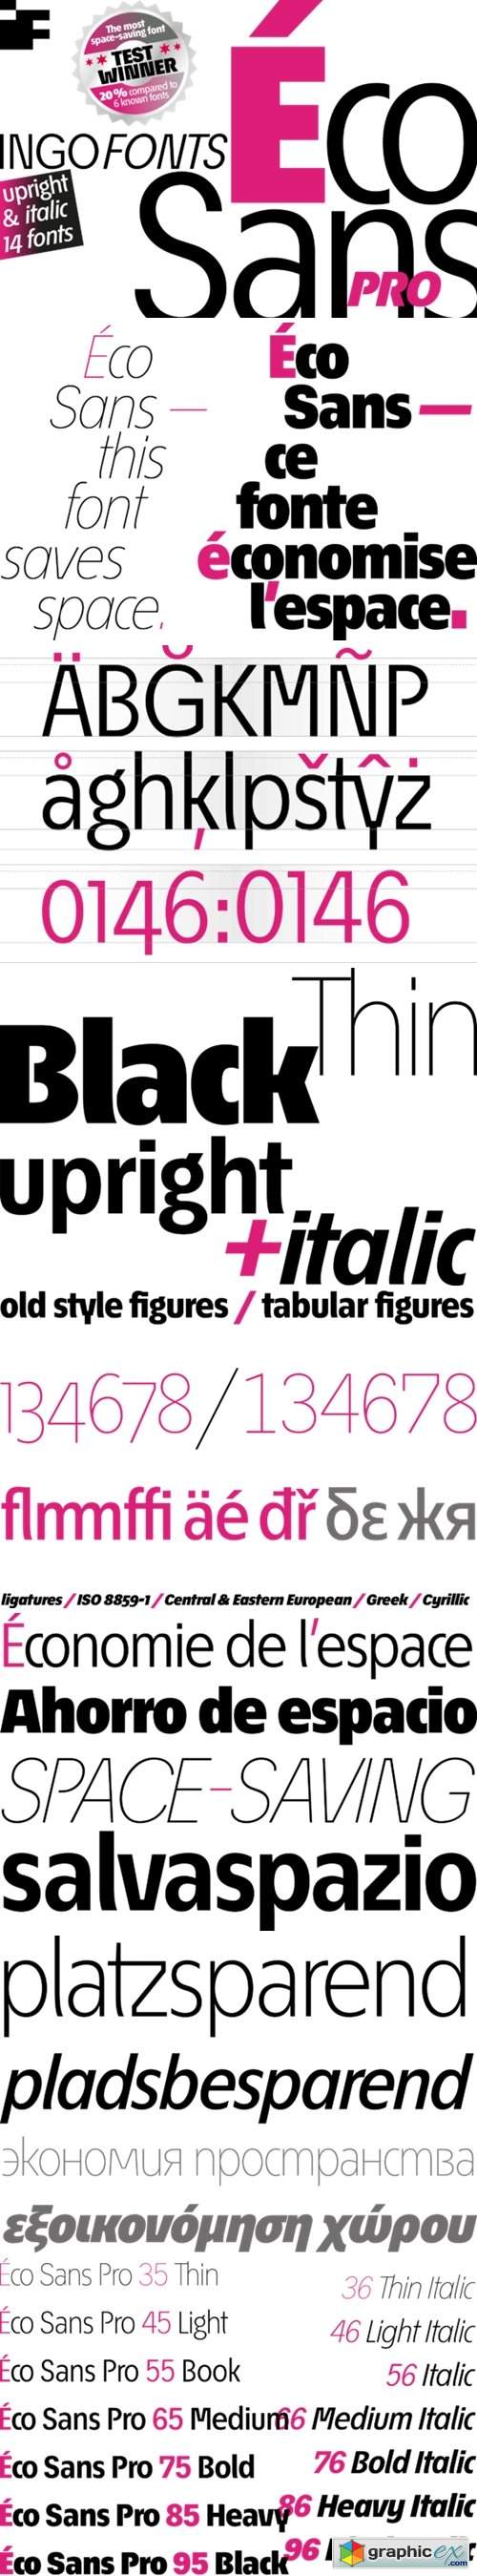 Éco Sans Pro Upright & Italic